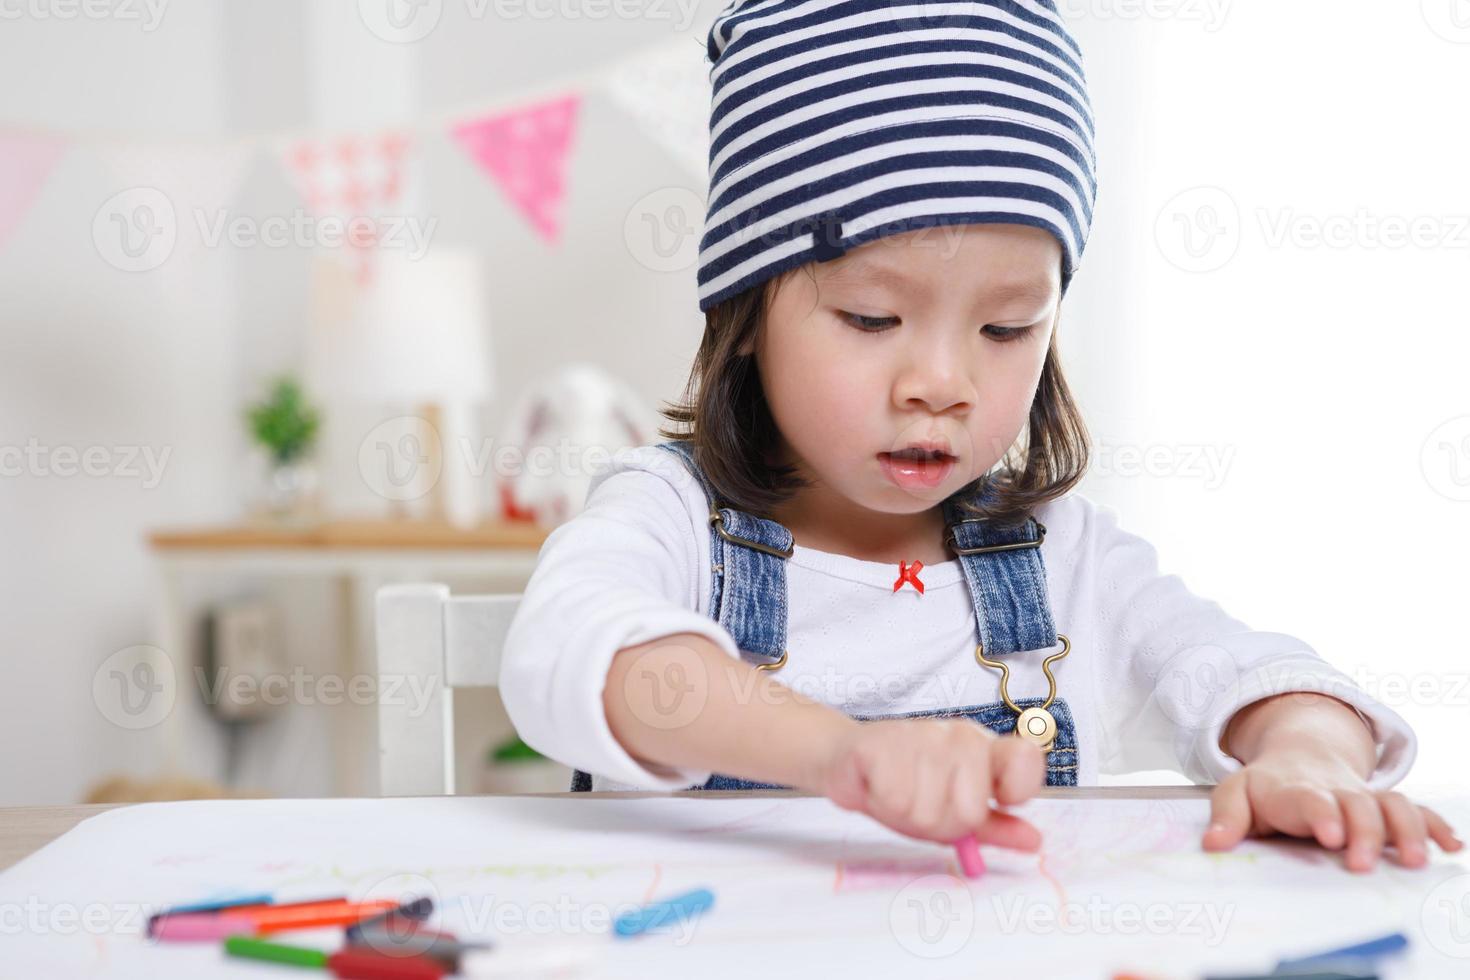 niña asiática sentada a la mesa en la habitación, niña preescolar dibujando en papel con bolígrafos coloridos en un día soleado, jardín de infantes o foto